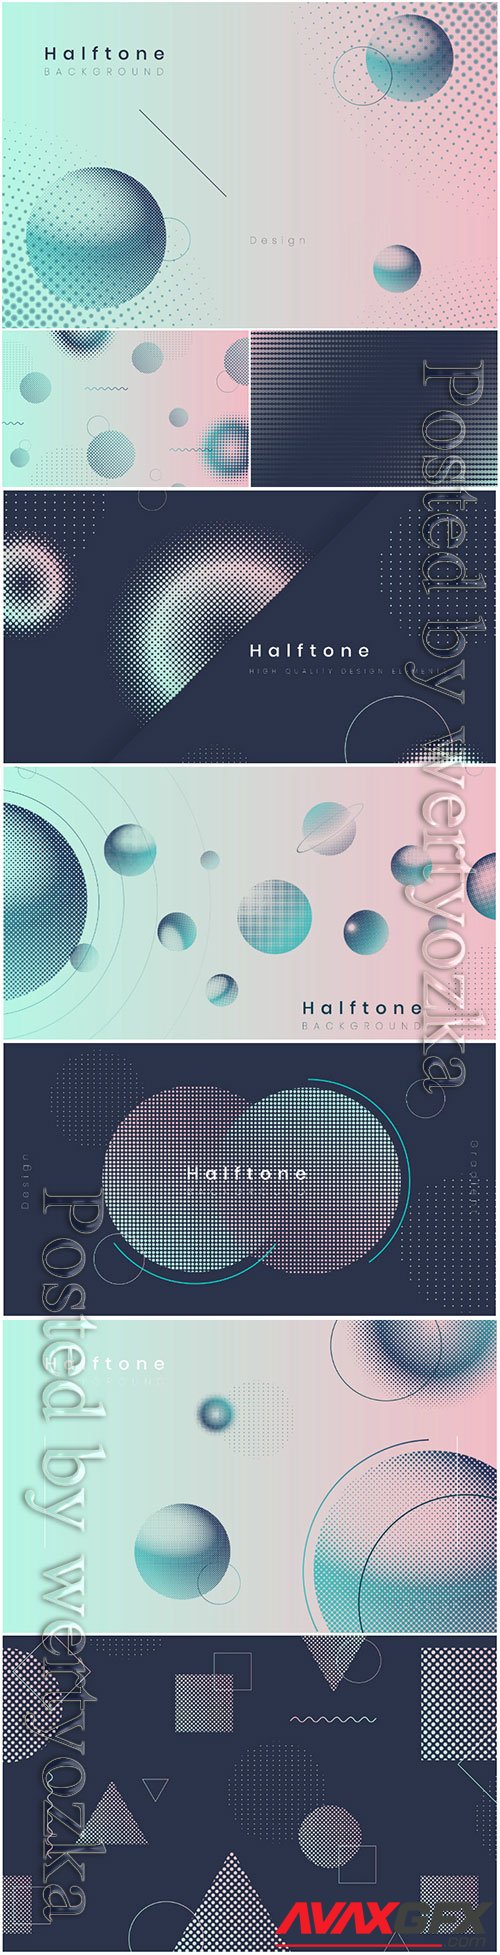 Halftone gradient vector background